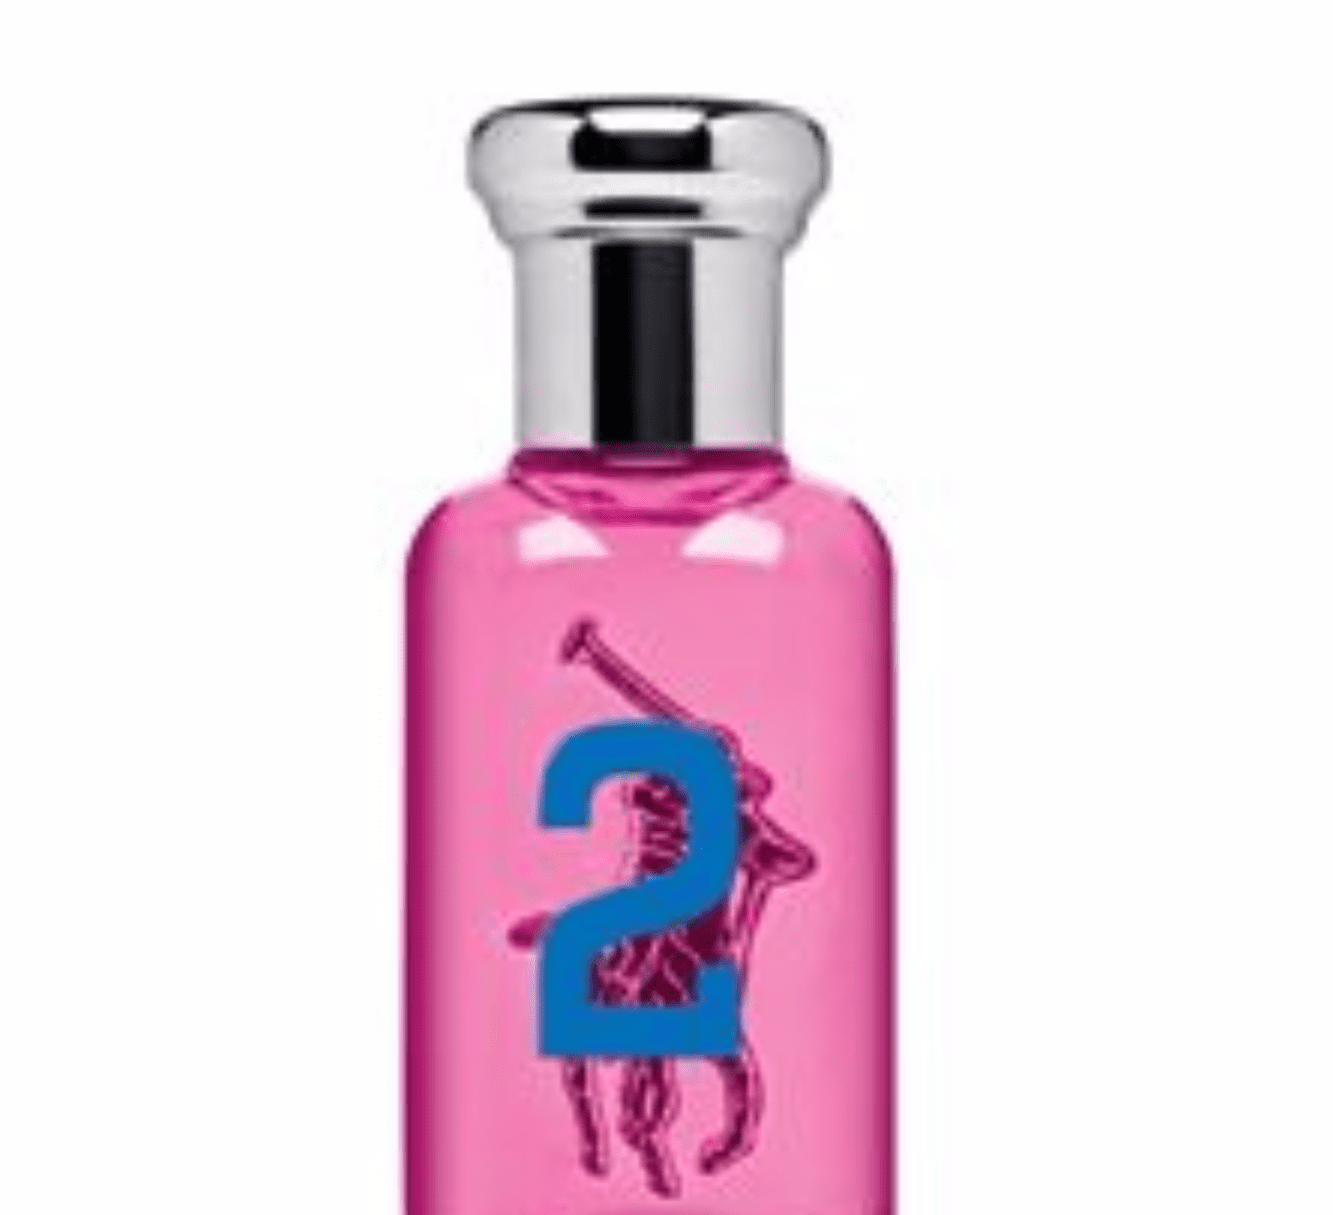 polo 2 womens perfume